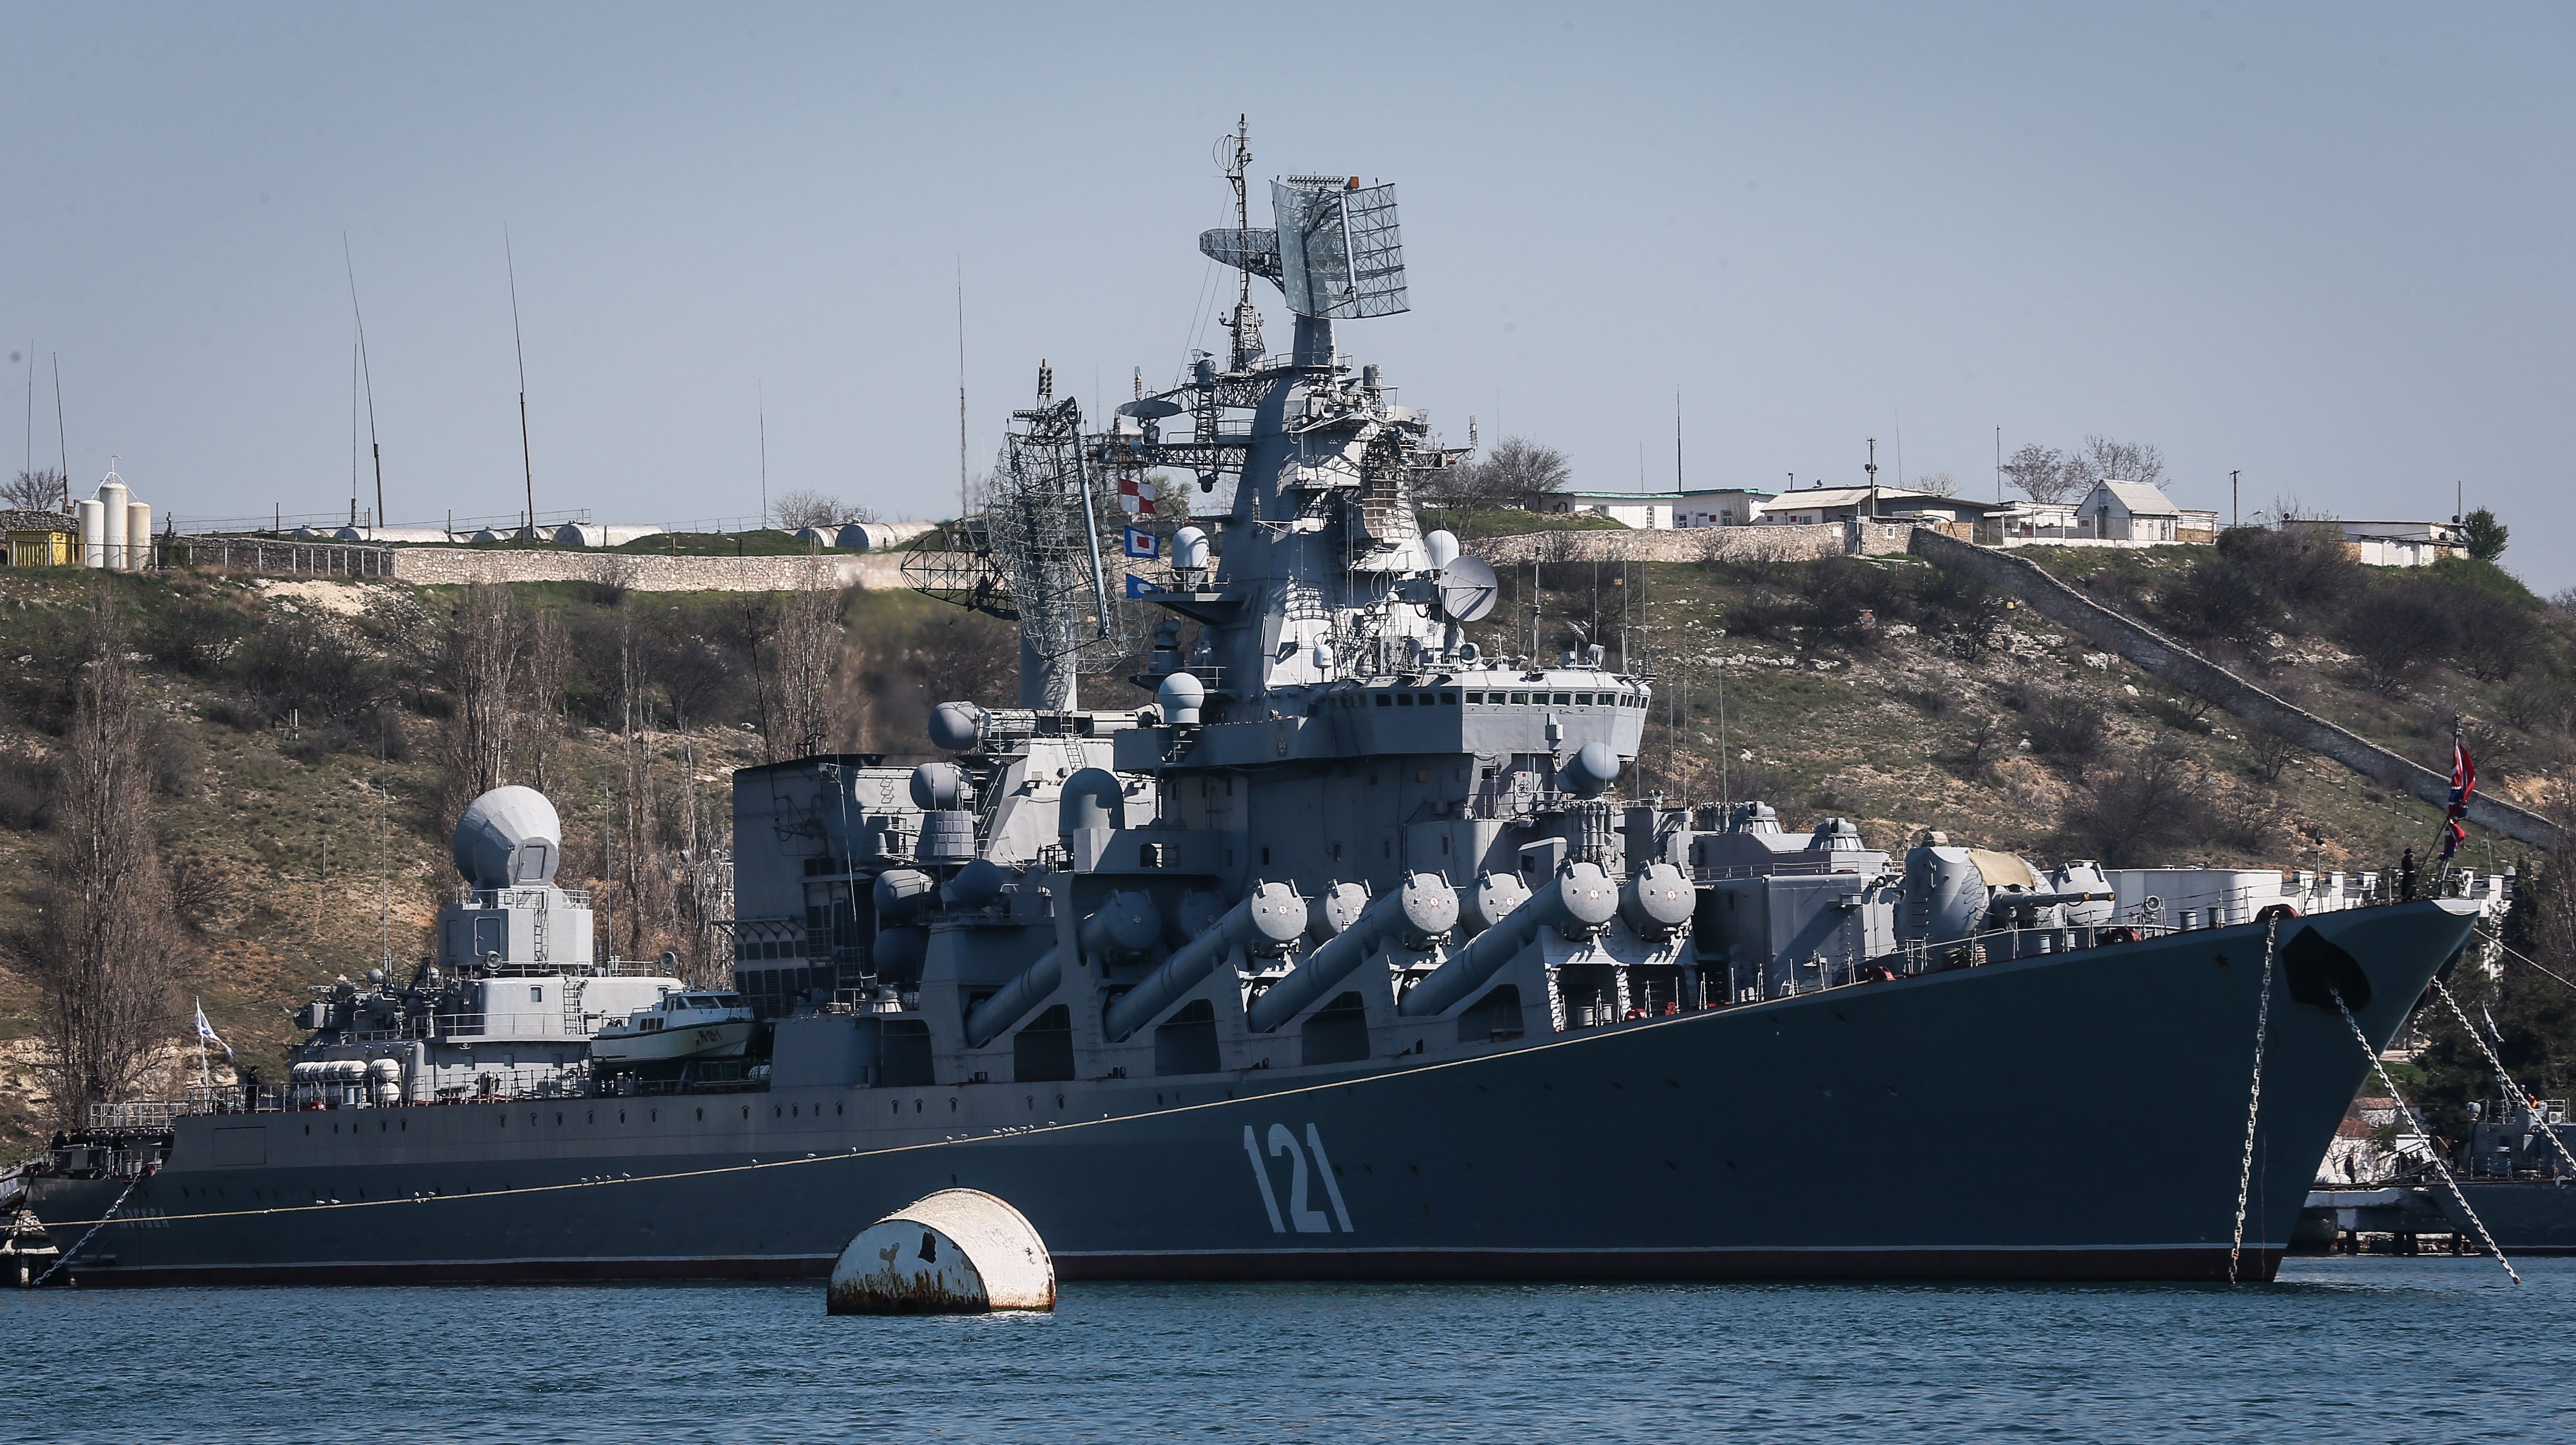 File photo of Russian Black Sea flagship the Moskva